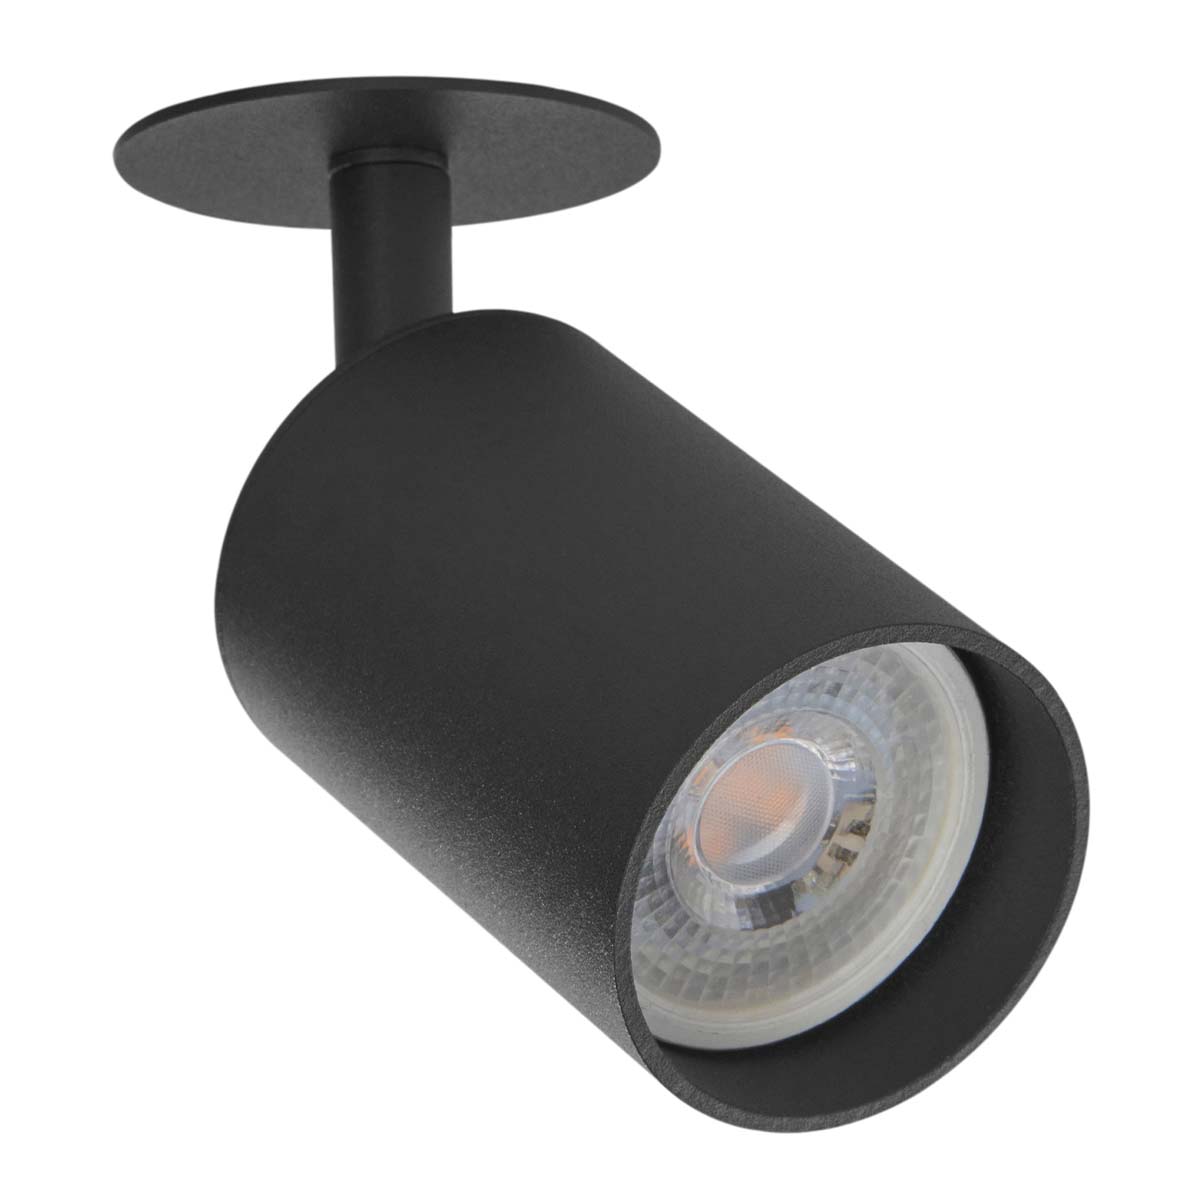 Luminaria LED de empotrar en techo tipo spot GU10 50 W máx. 120 v~ Modelo TL-5150.EM Illux